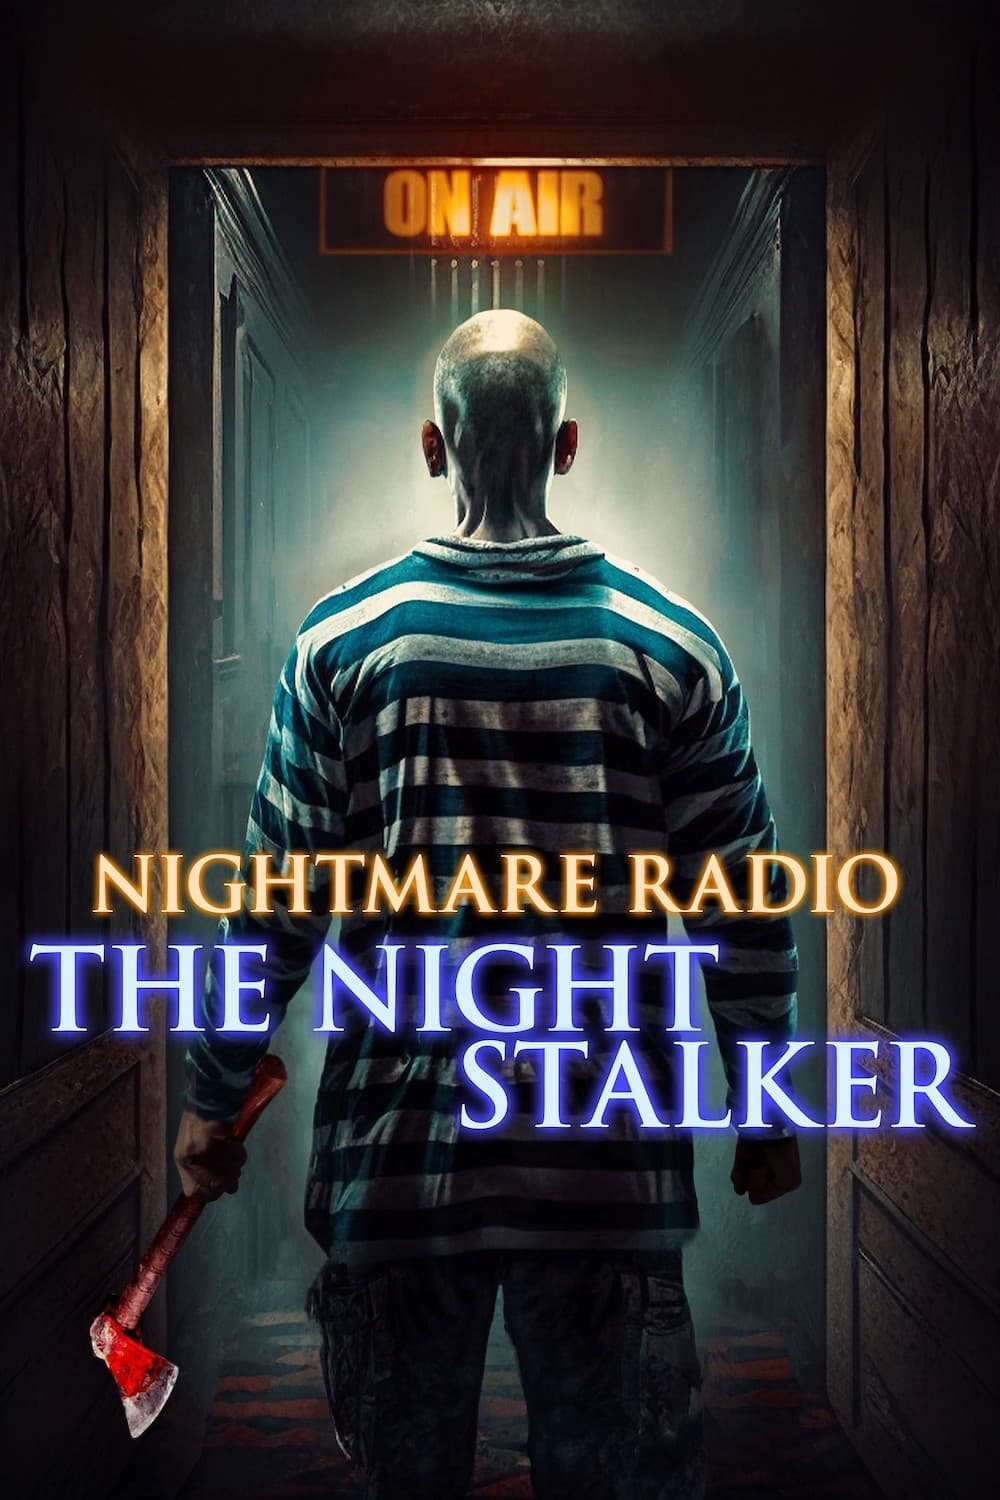 شب وحشت: استاکر شب (Nightmare Radio: The Night Stalker)